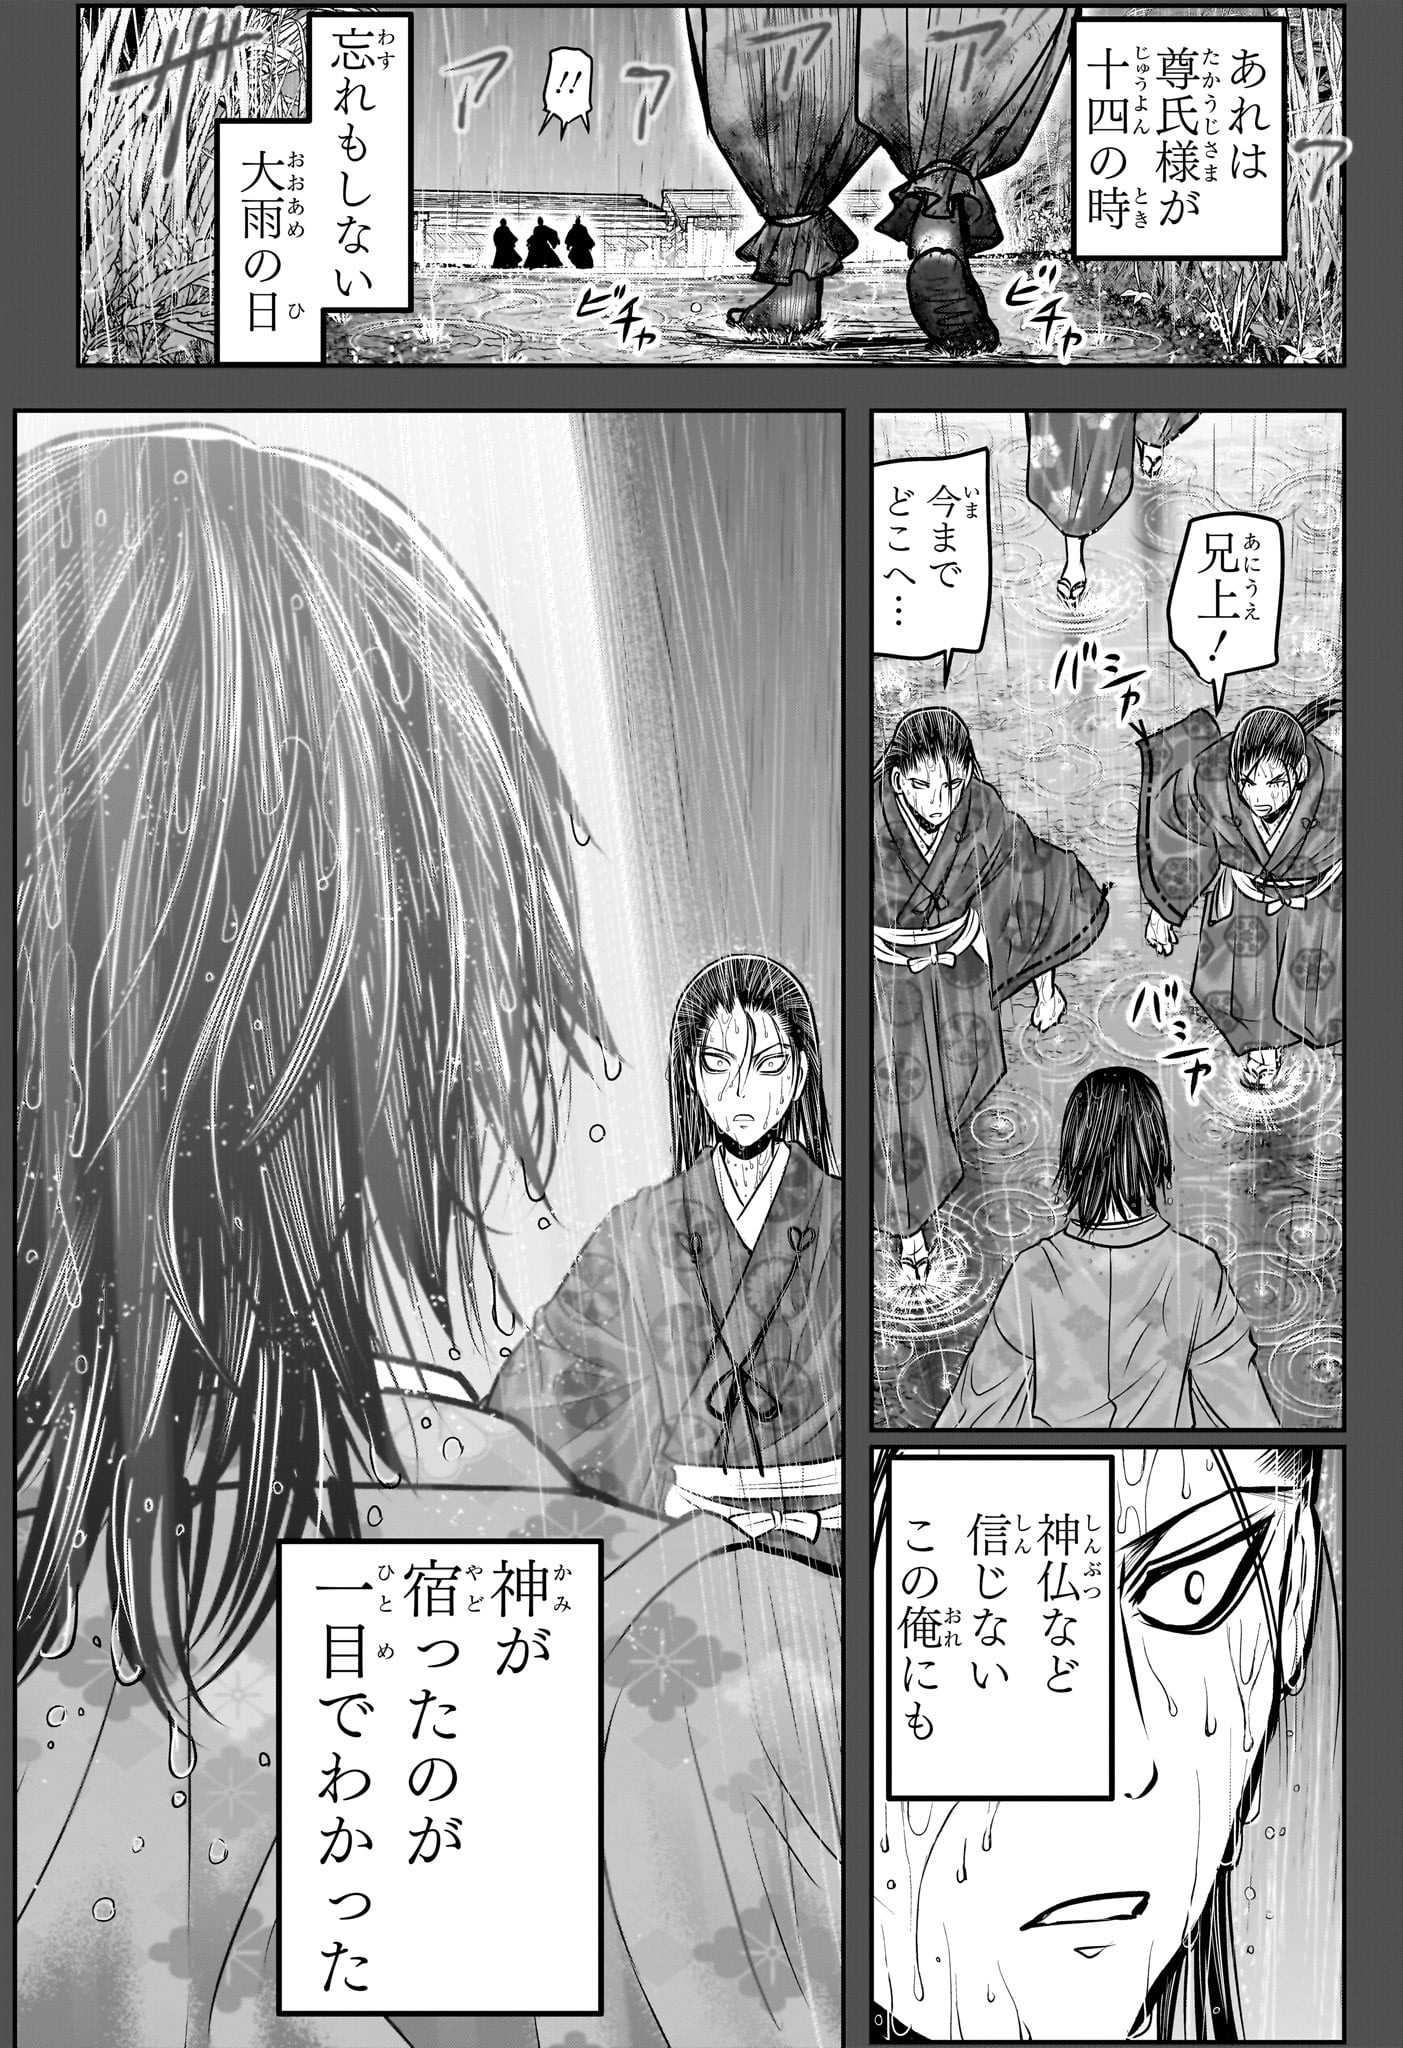 Nige Jouzu no Wakagimi - Chapter 164 - Page 2